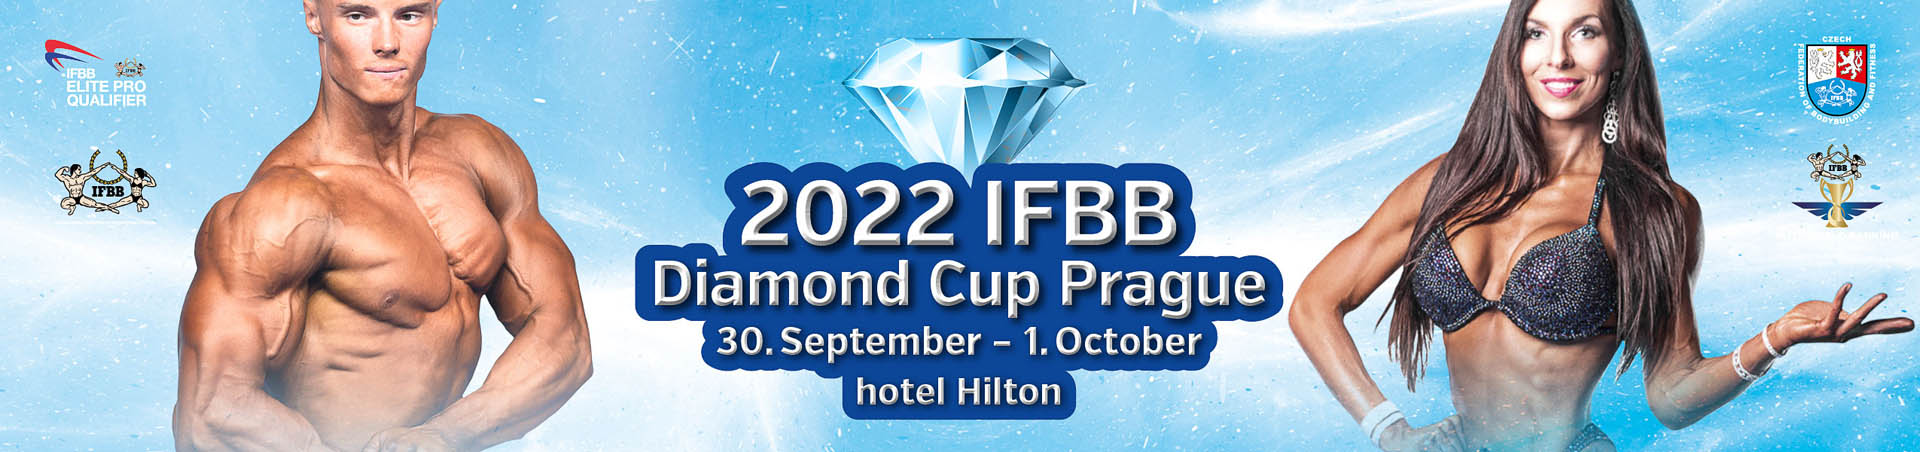 IFBB DIAMOND CUP PRAGUE